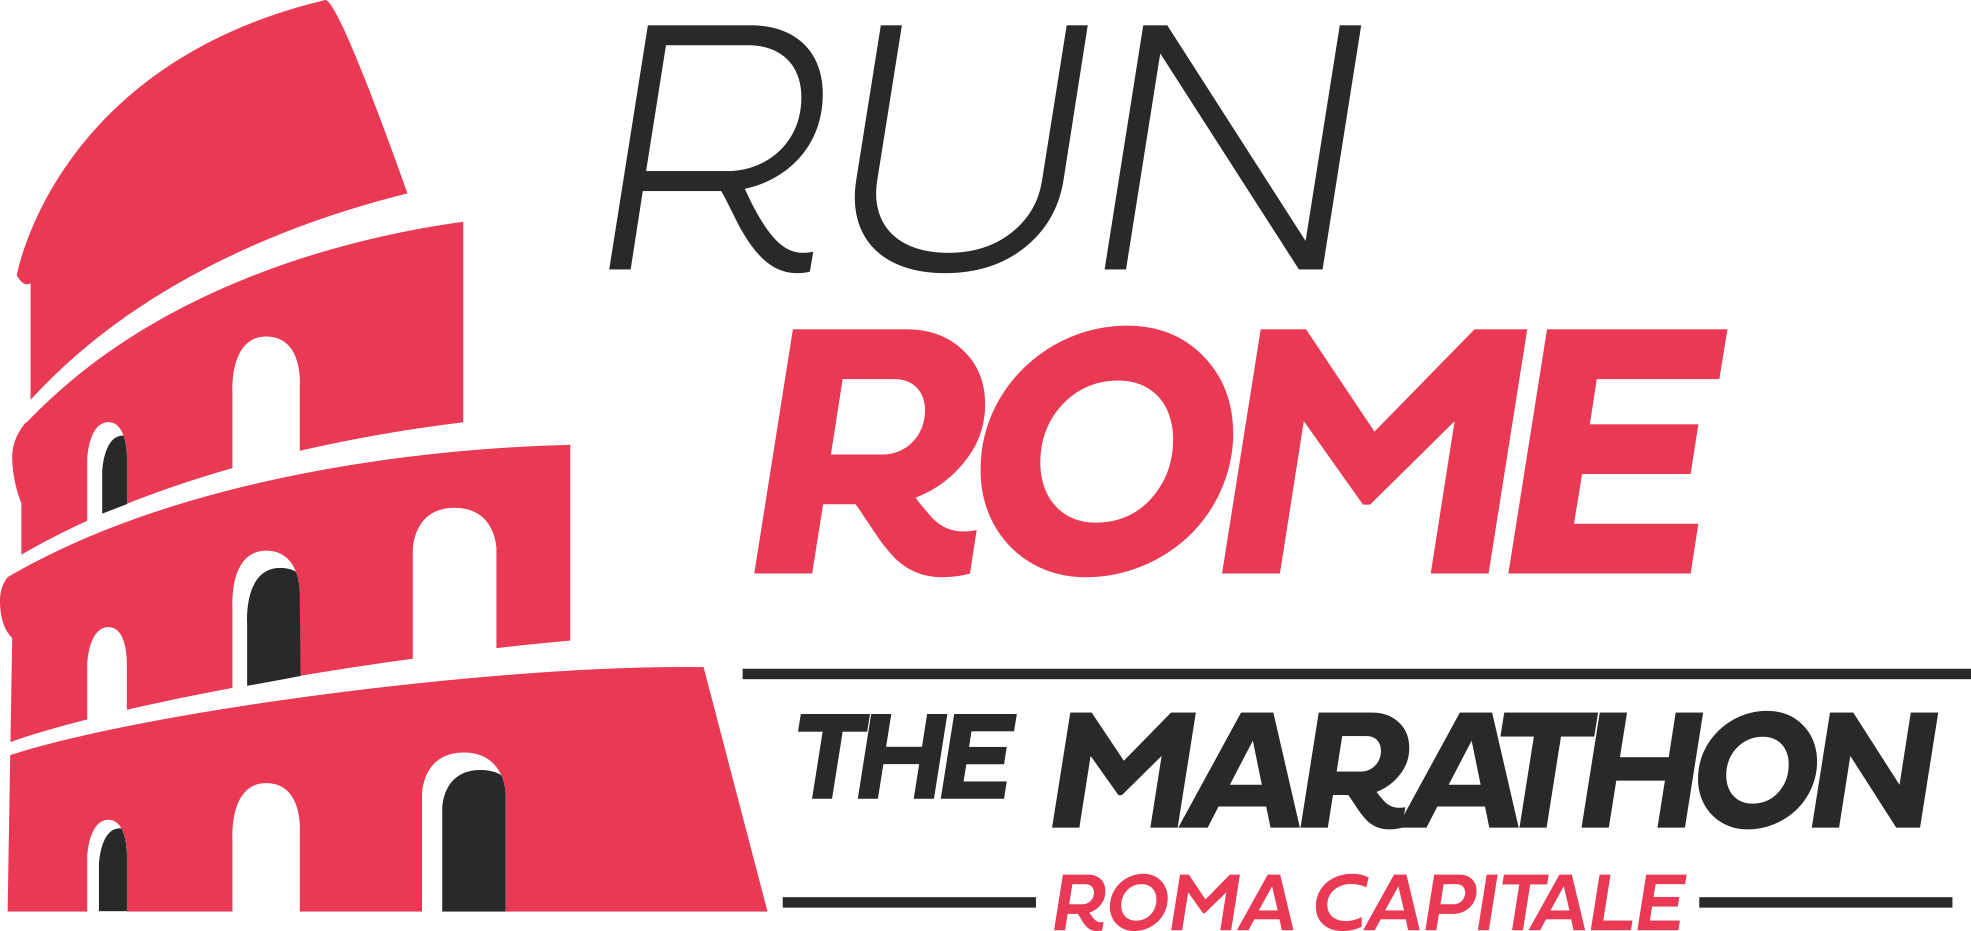 RUN ROME THE MARATHON